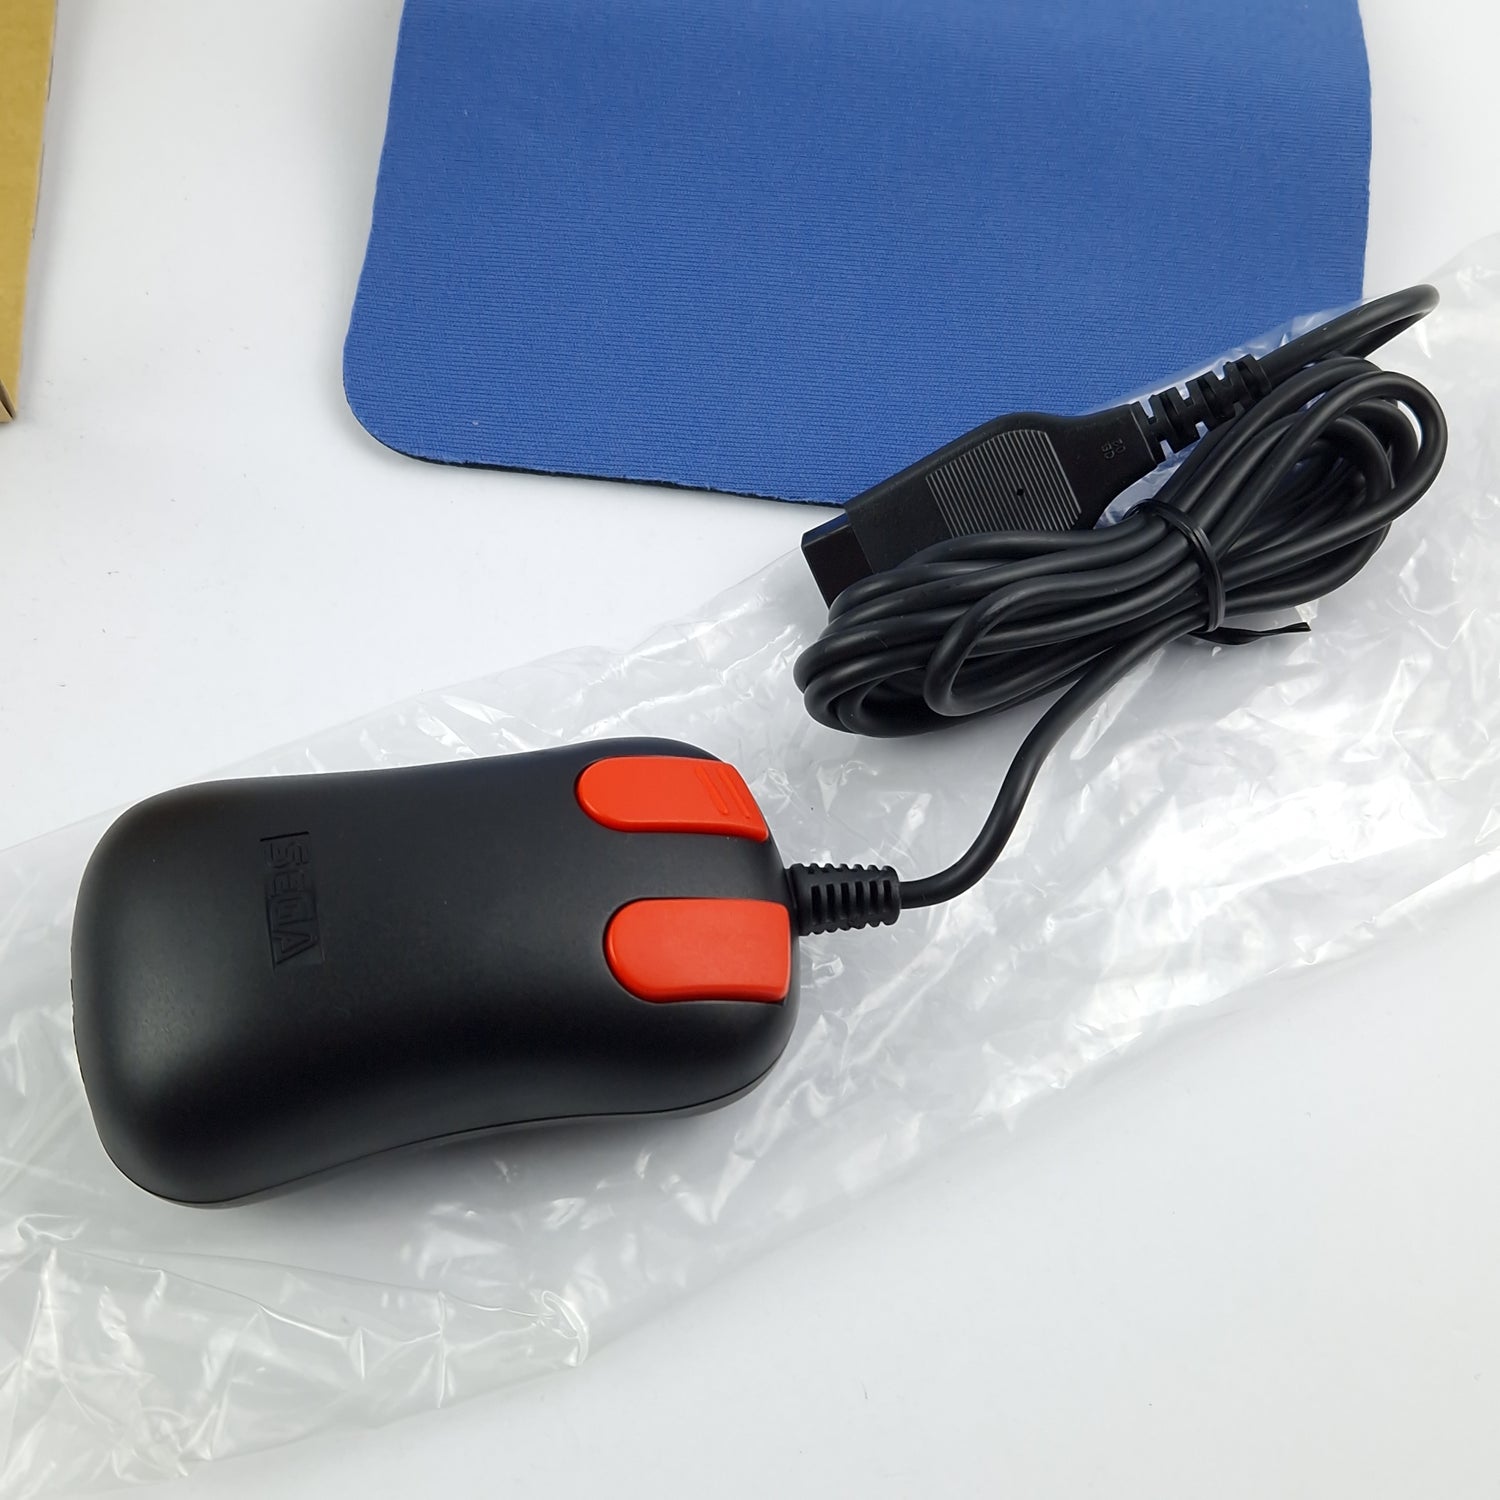 Sega Mega Drive : Mouse + Mousepad - Controller OVP Anleitung NEU NEW UNUSED